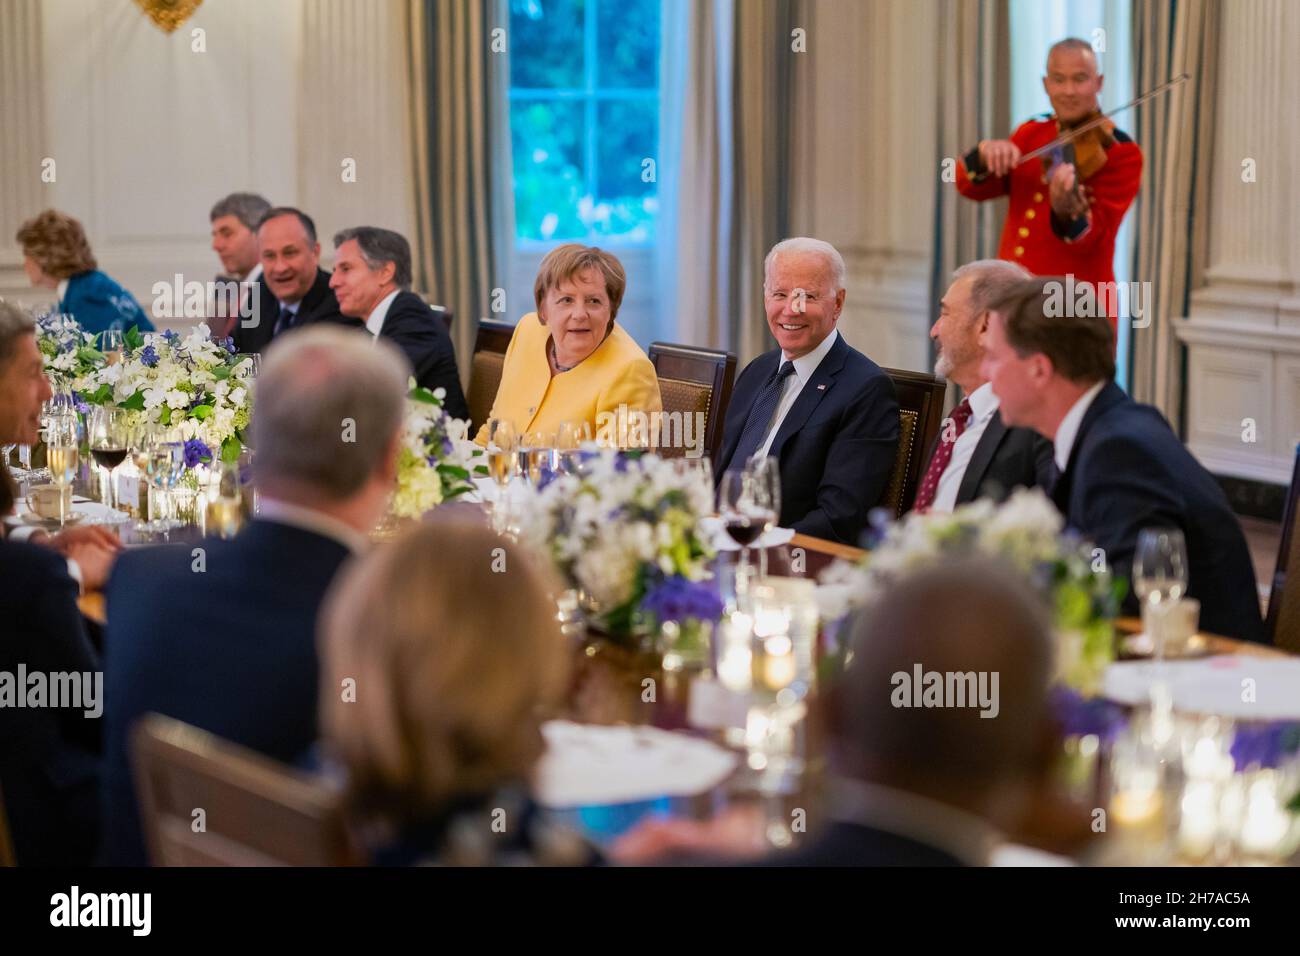 WASHINGTON DC, USA - 15 July 2021 - US President Joe Biden and First Lady Jill Biden, joined by Vice President Kamala Harris, Second Gentleman Douglas Stock Photo